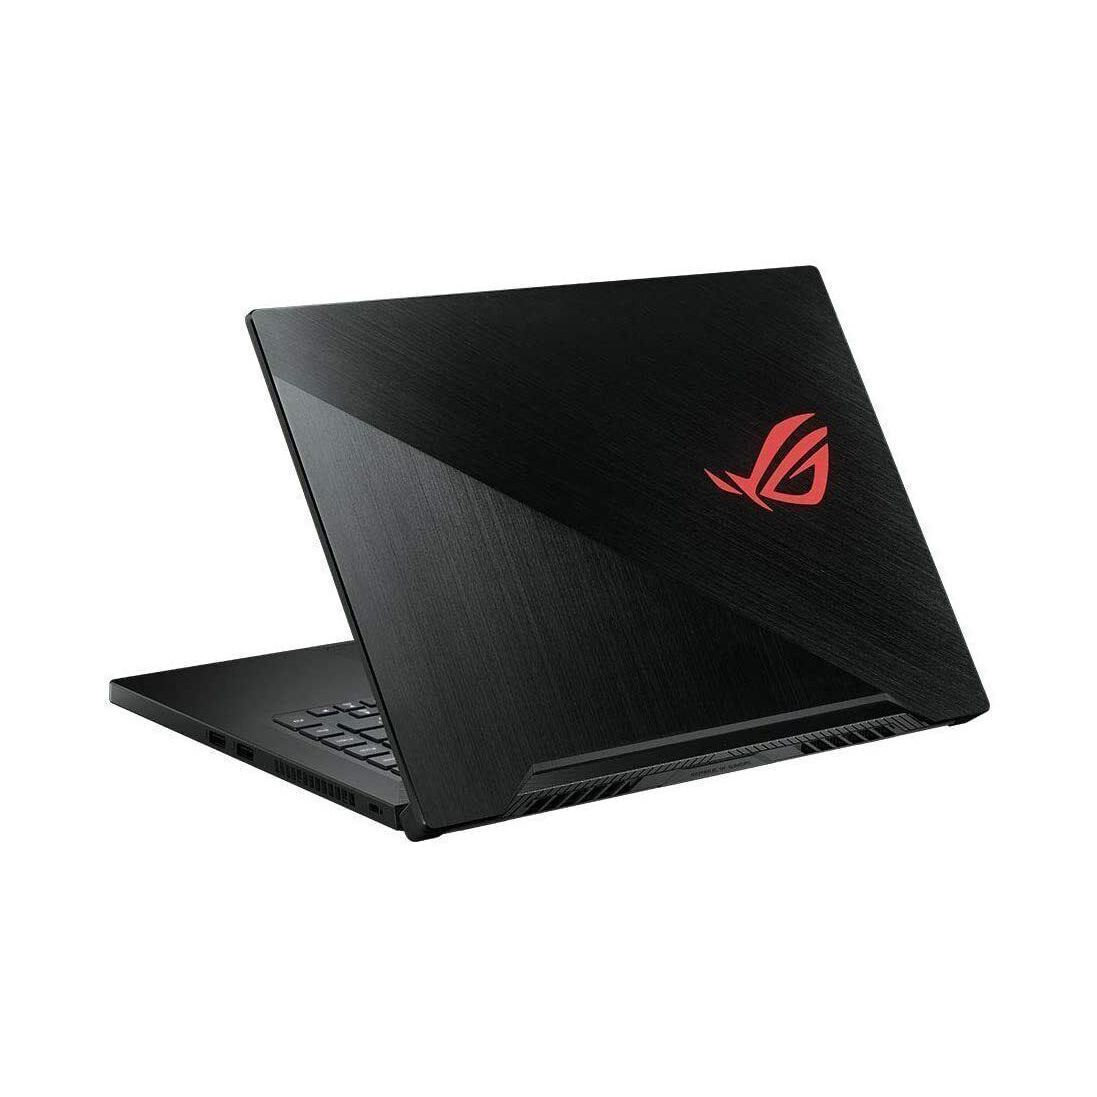 Asus ROG Zephyrus 15 Gaming Laptop AMD Ryzen 7 8GB RAM 512GB SSD GTX 1660 Ti